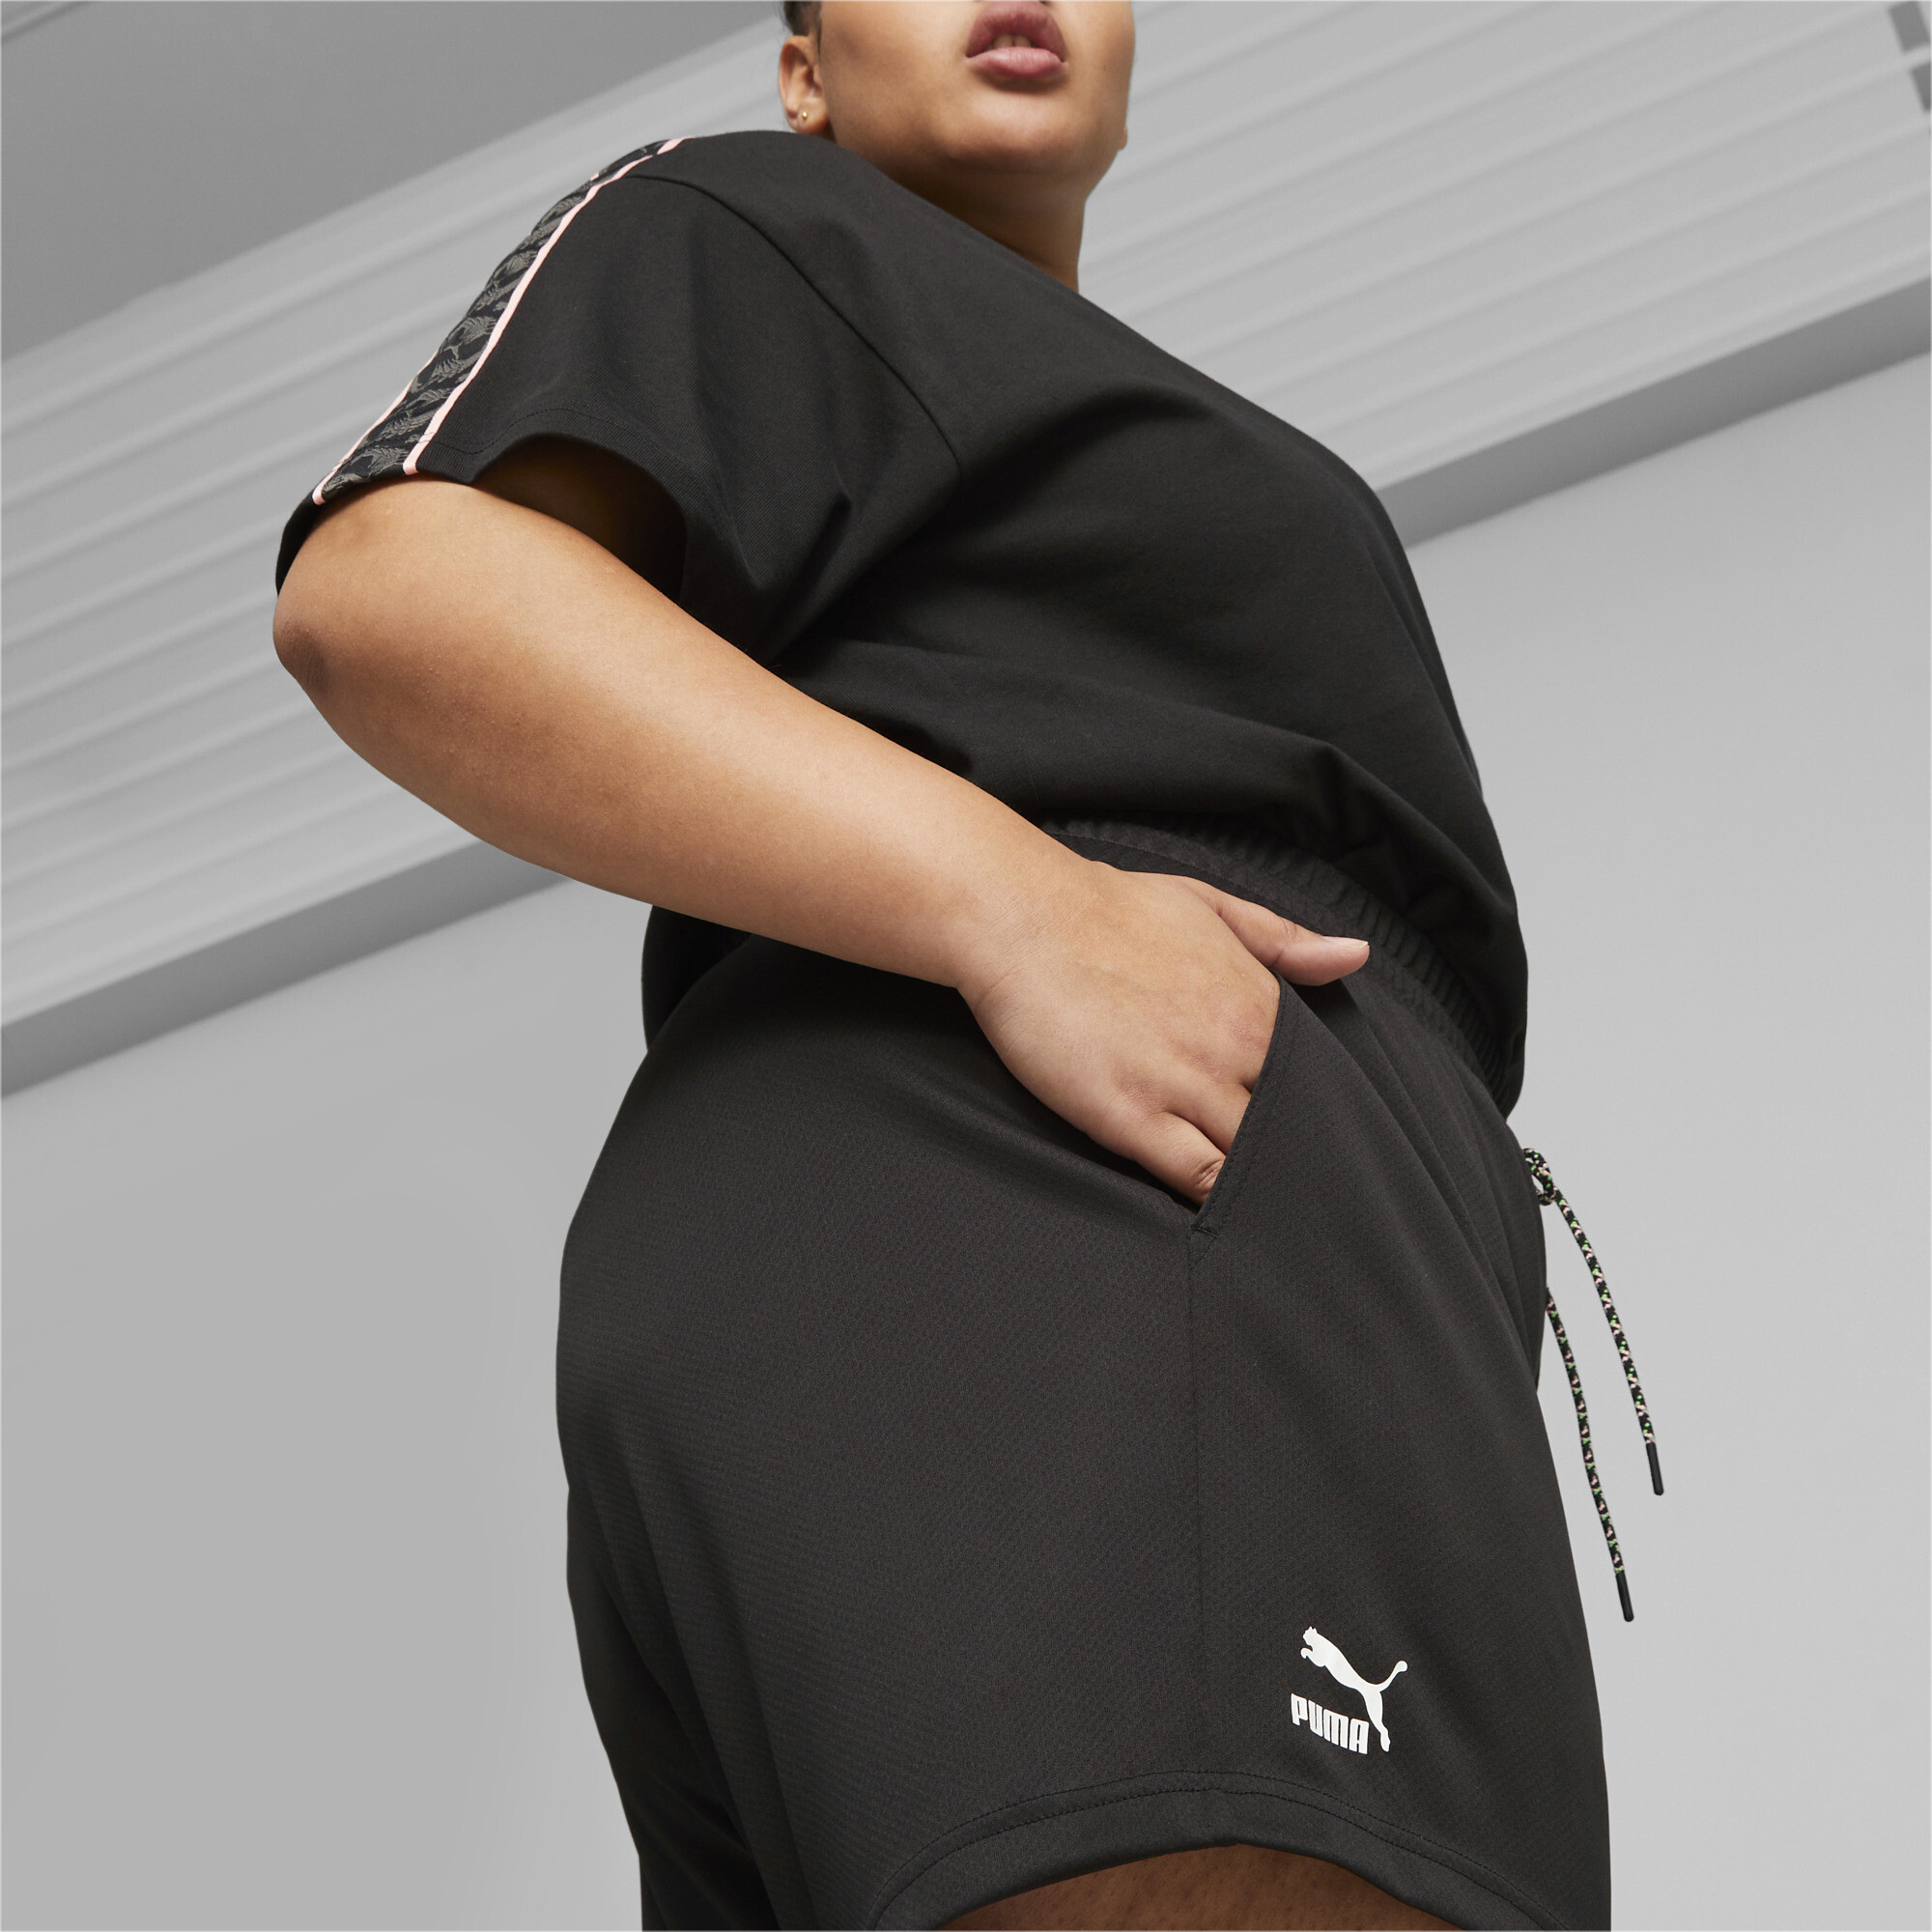 Women's PUMA Dare To Football Shorts In Black, Size 2X-Small